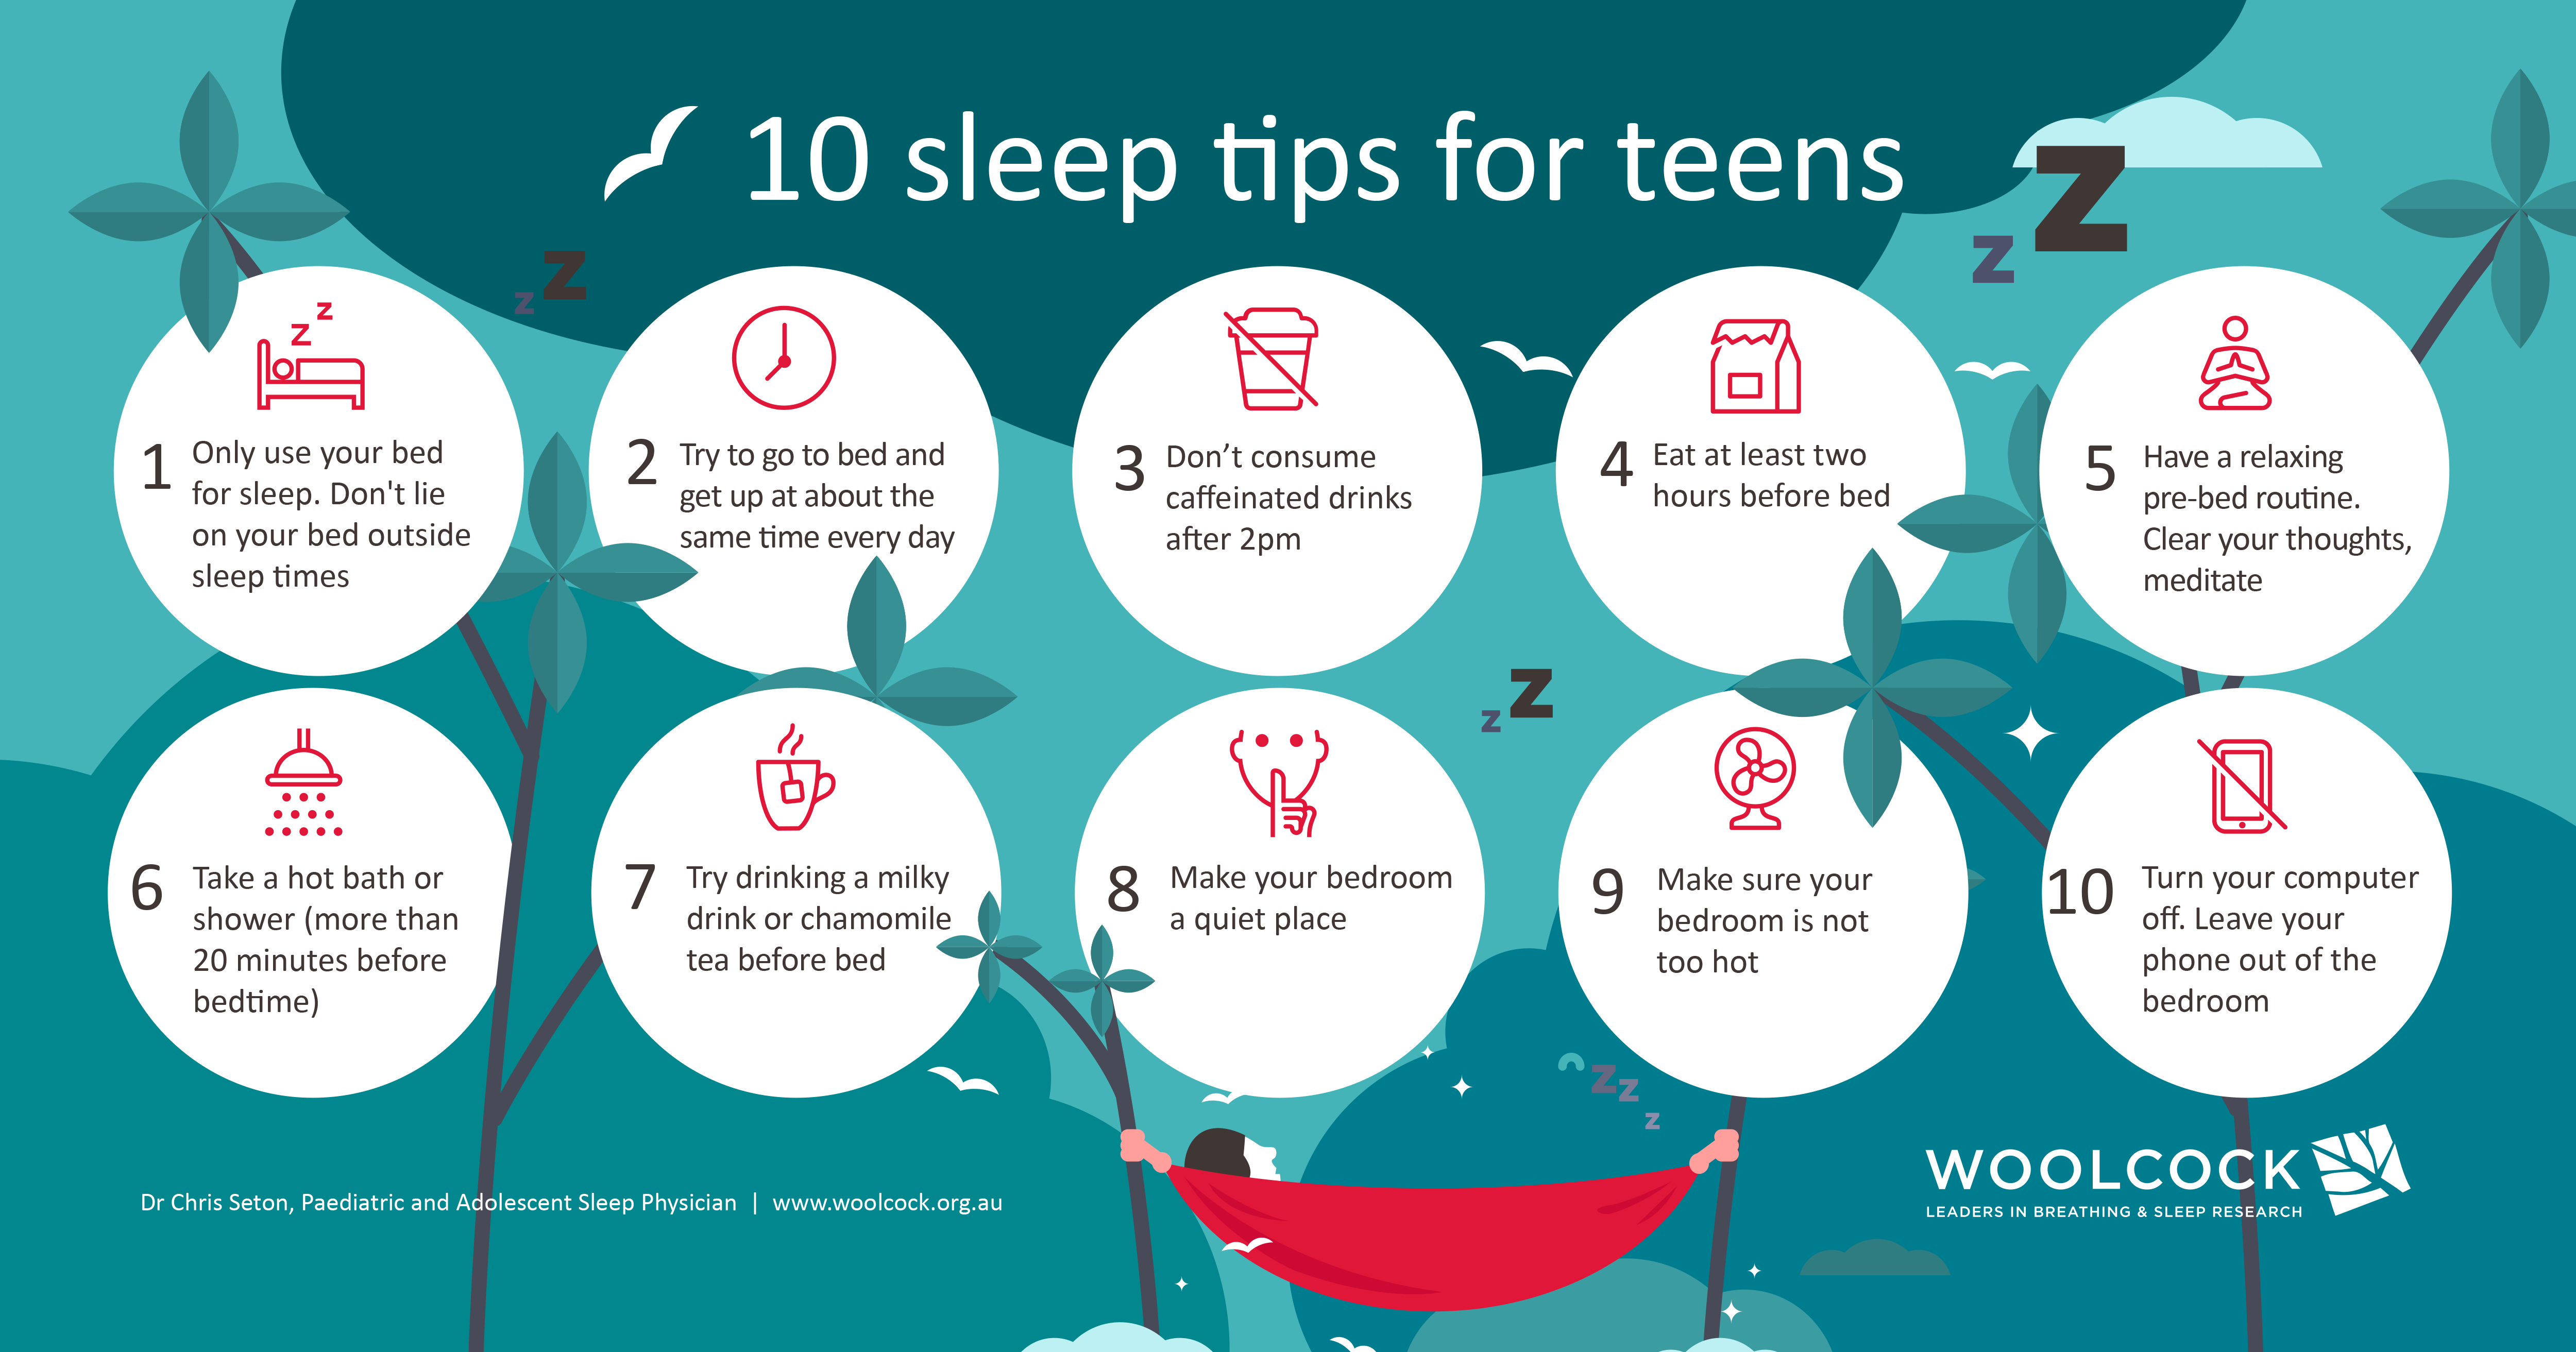 Tips to help young people sleep better